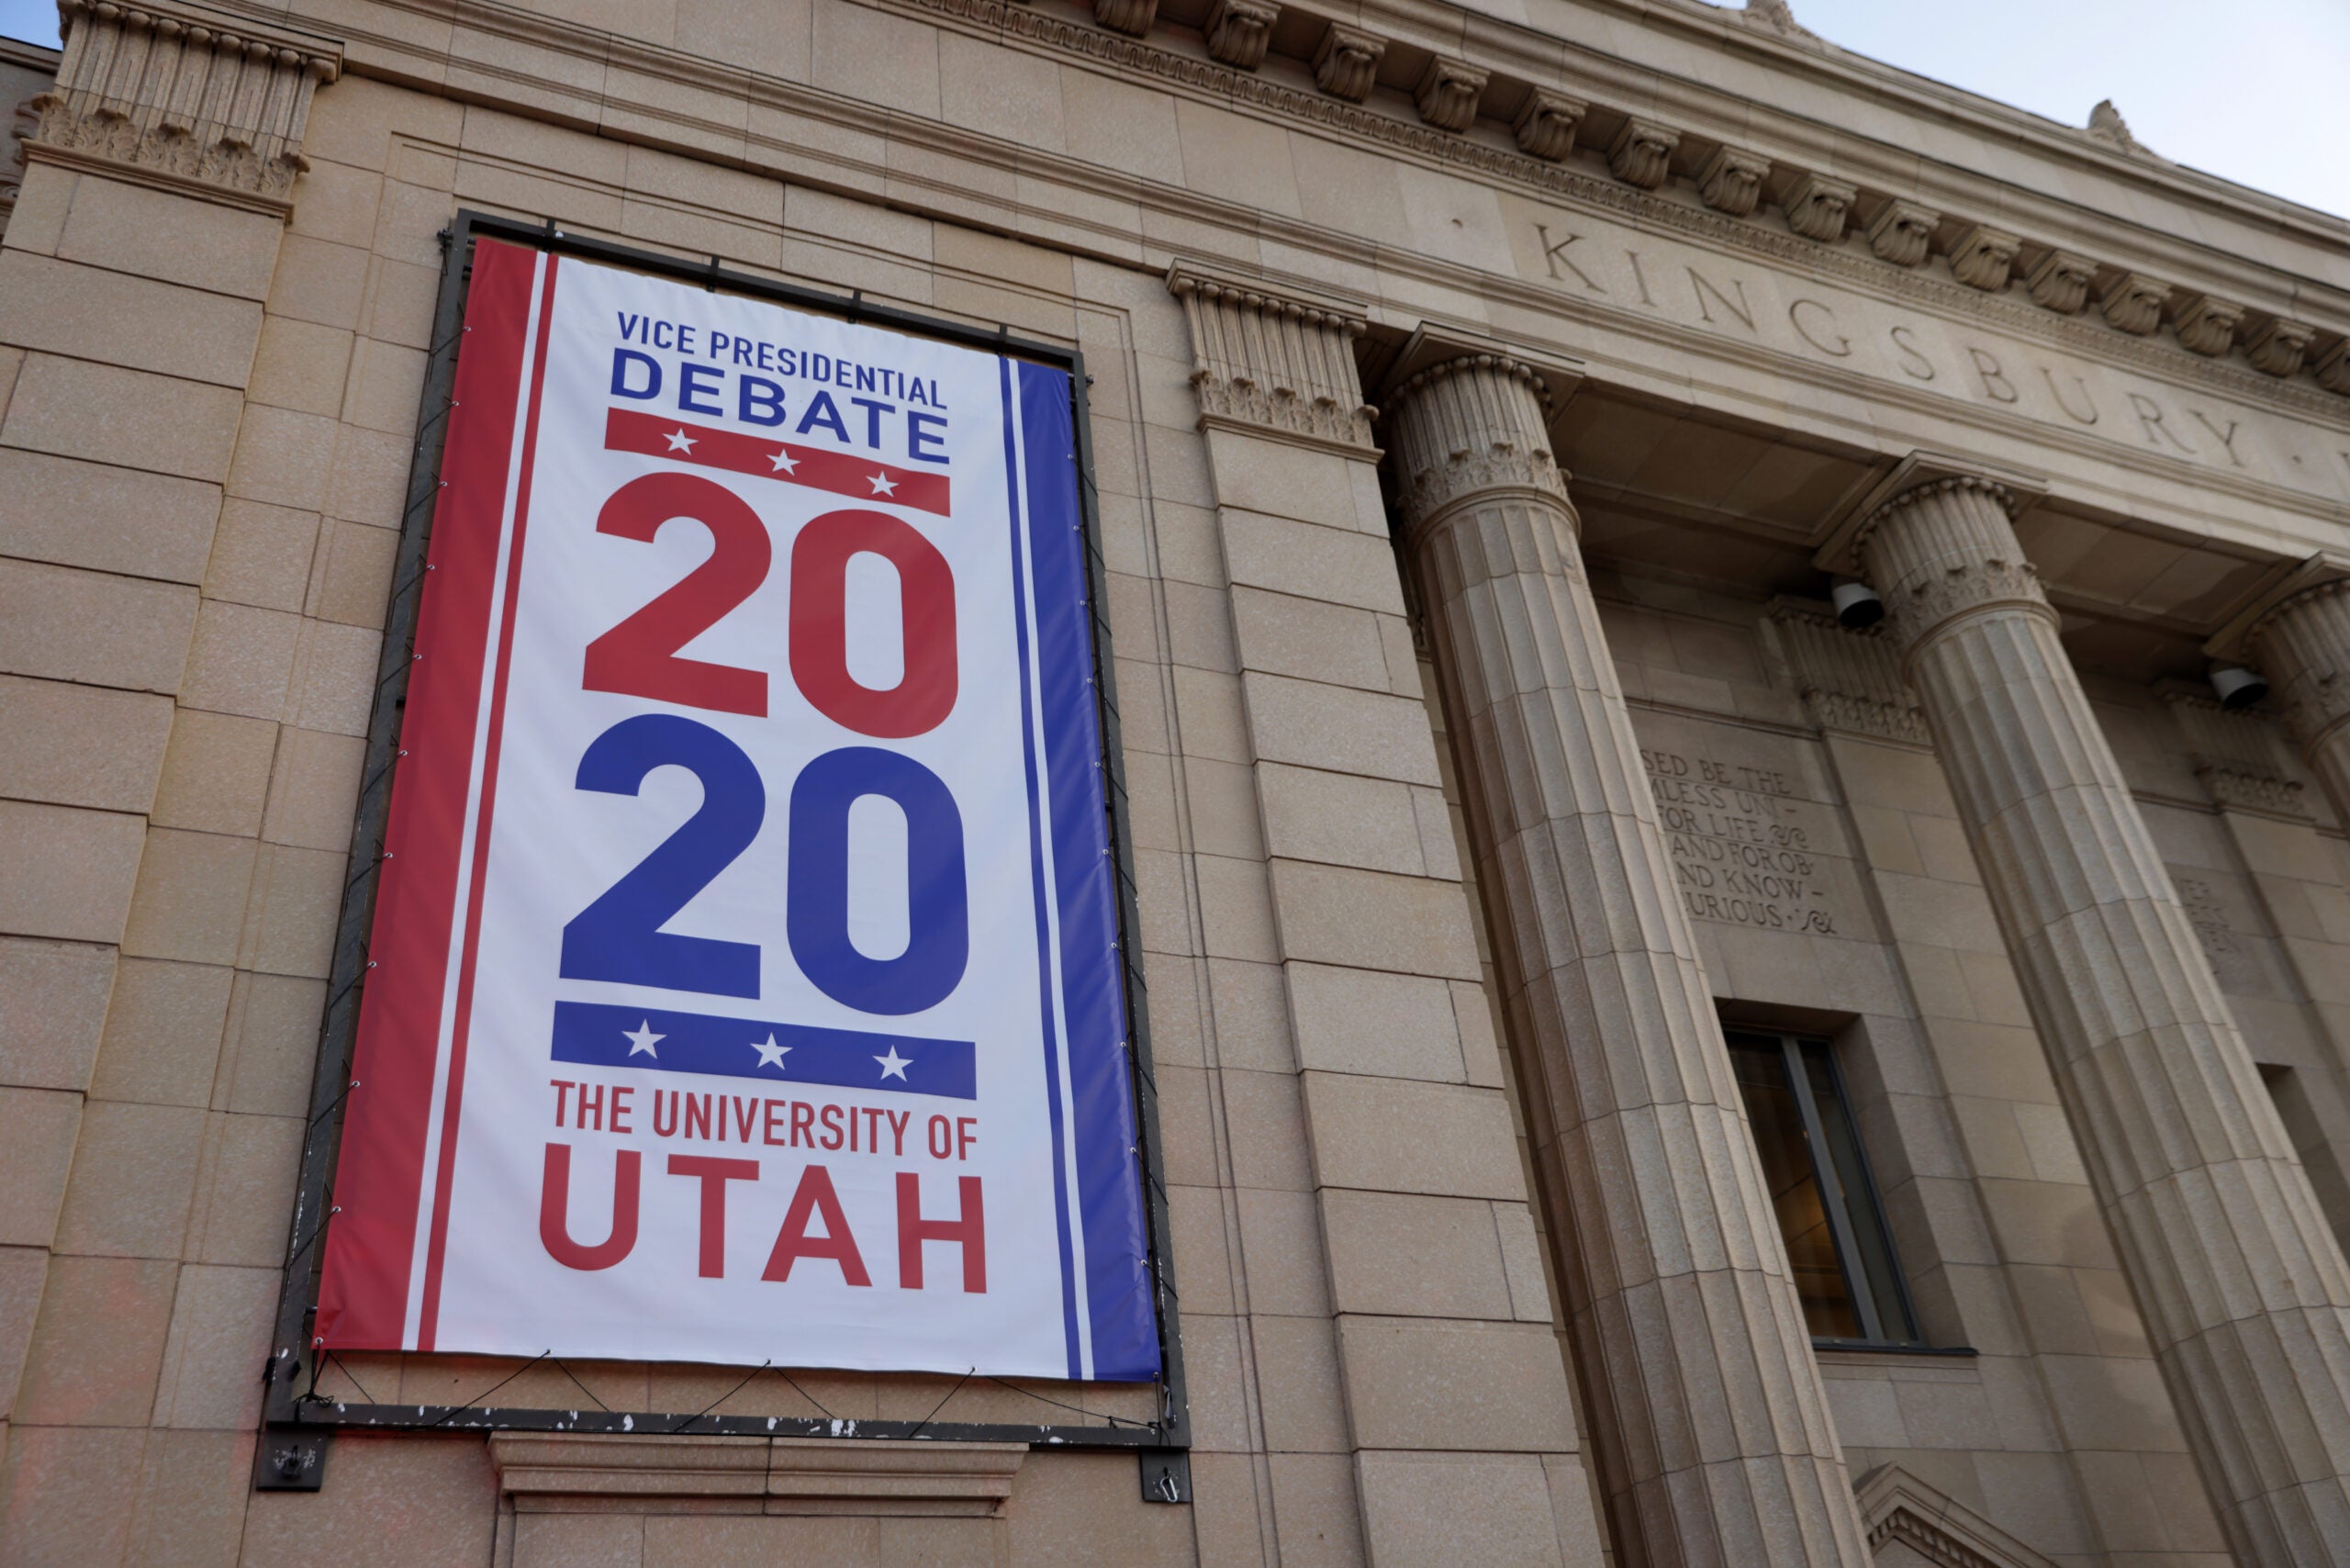 Salt Lake City Prepares For Vice Presidential Debate